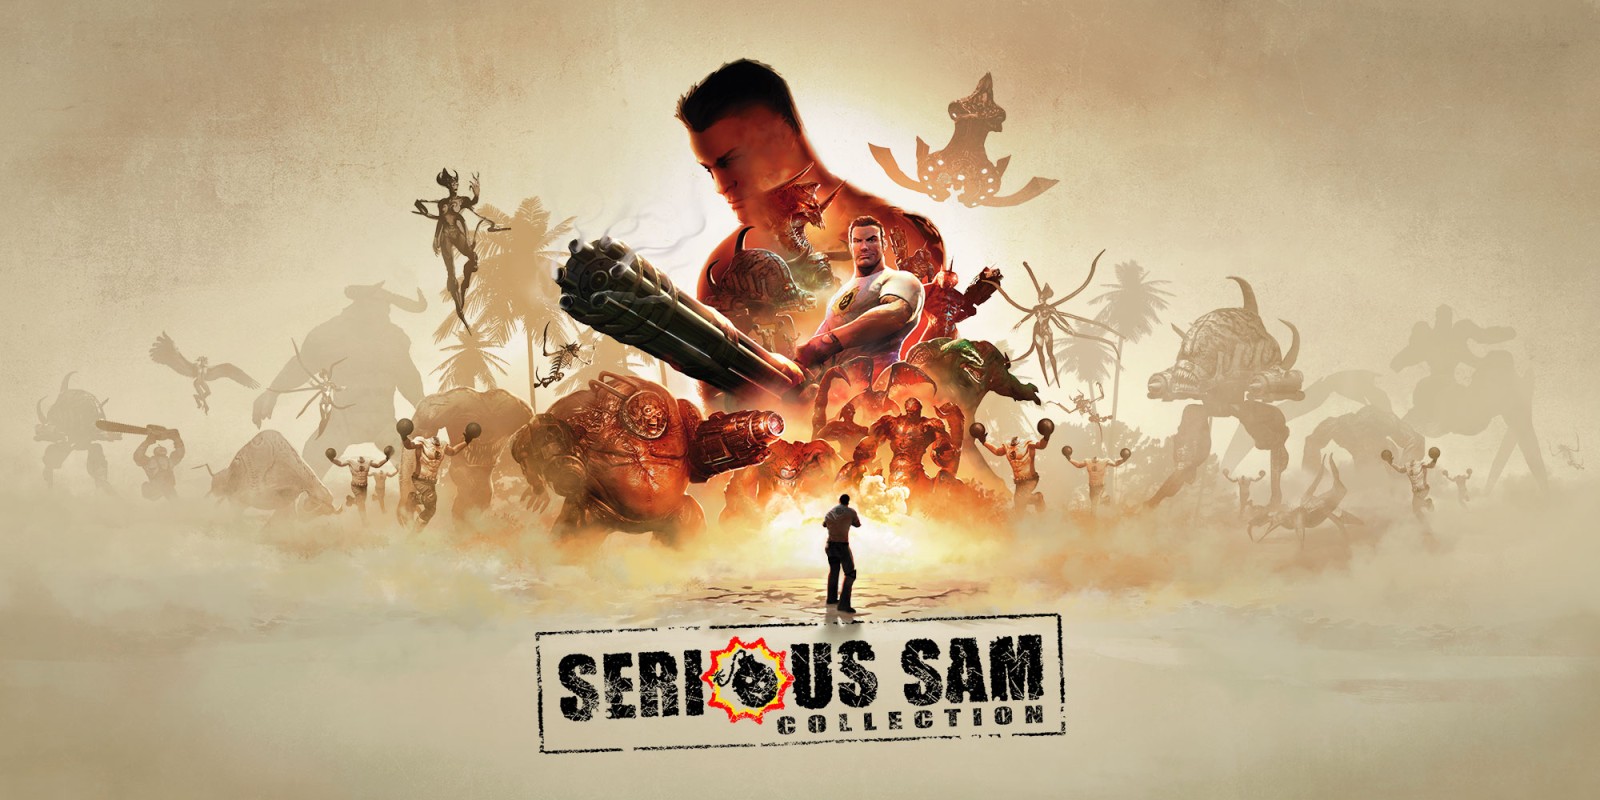 Serious Sam Collection Keyart